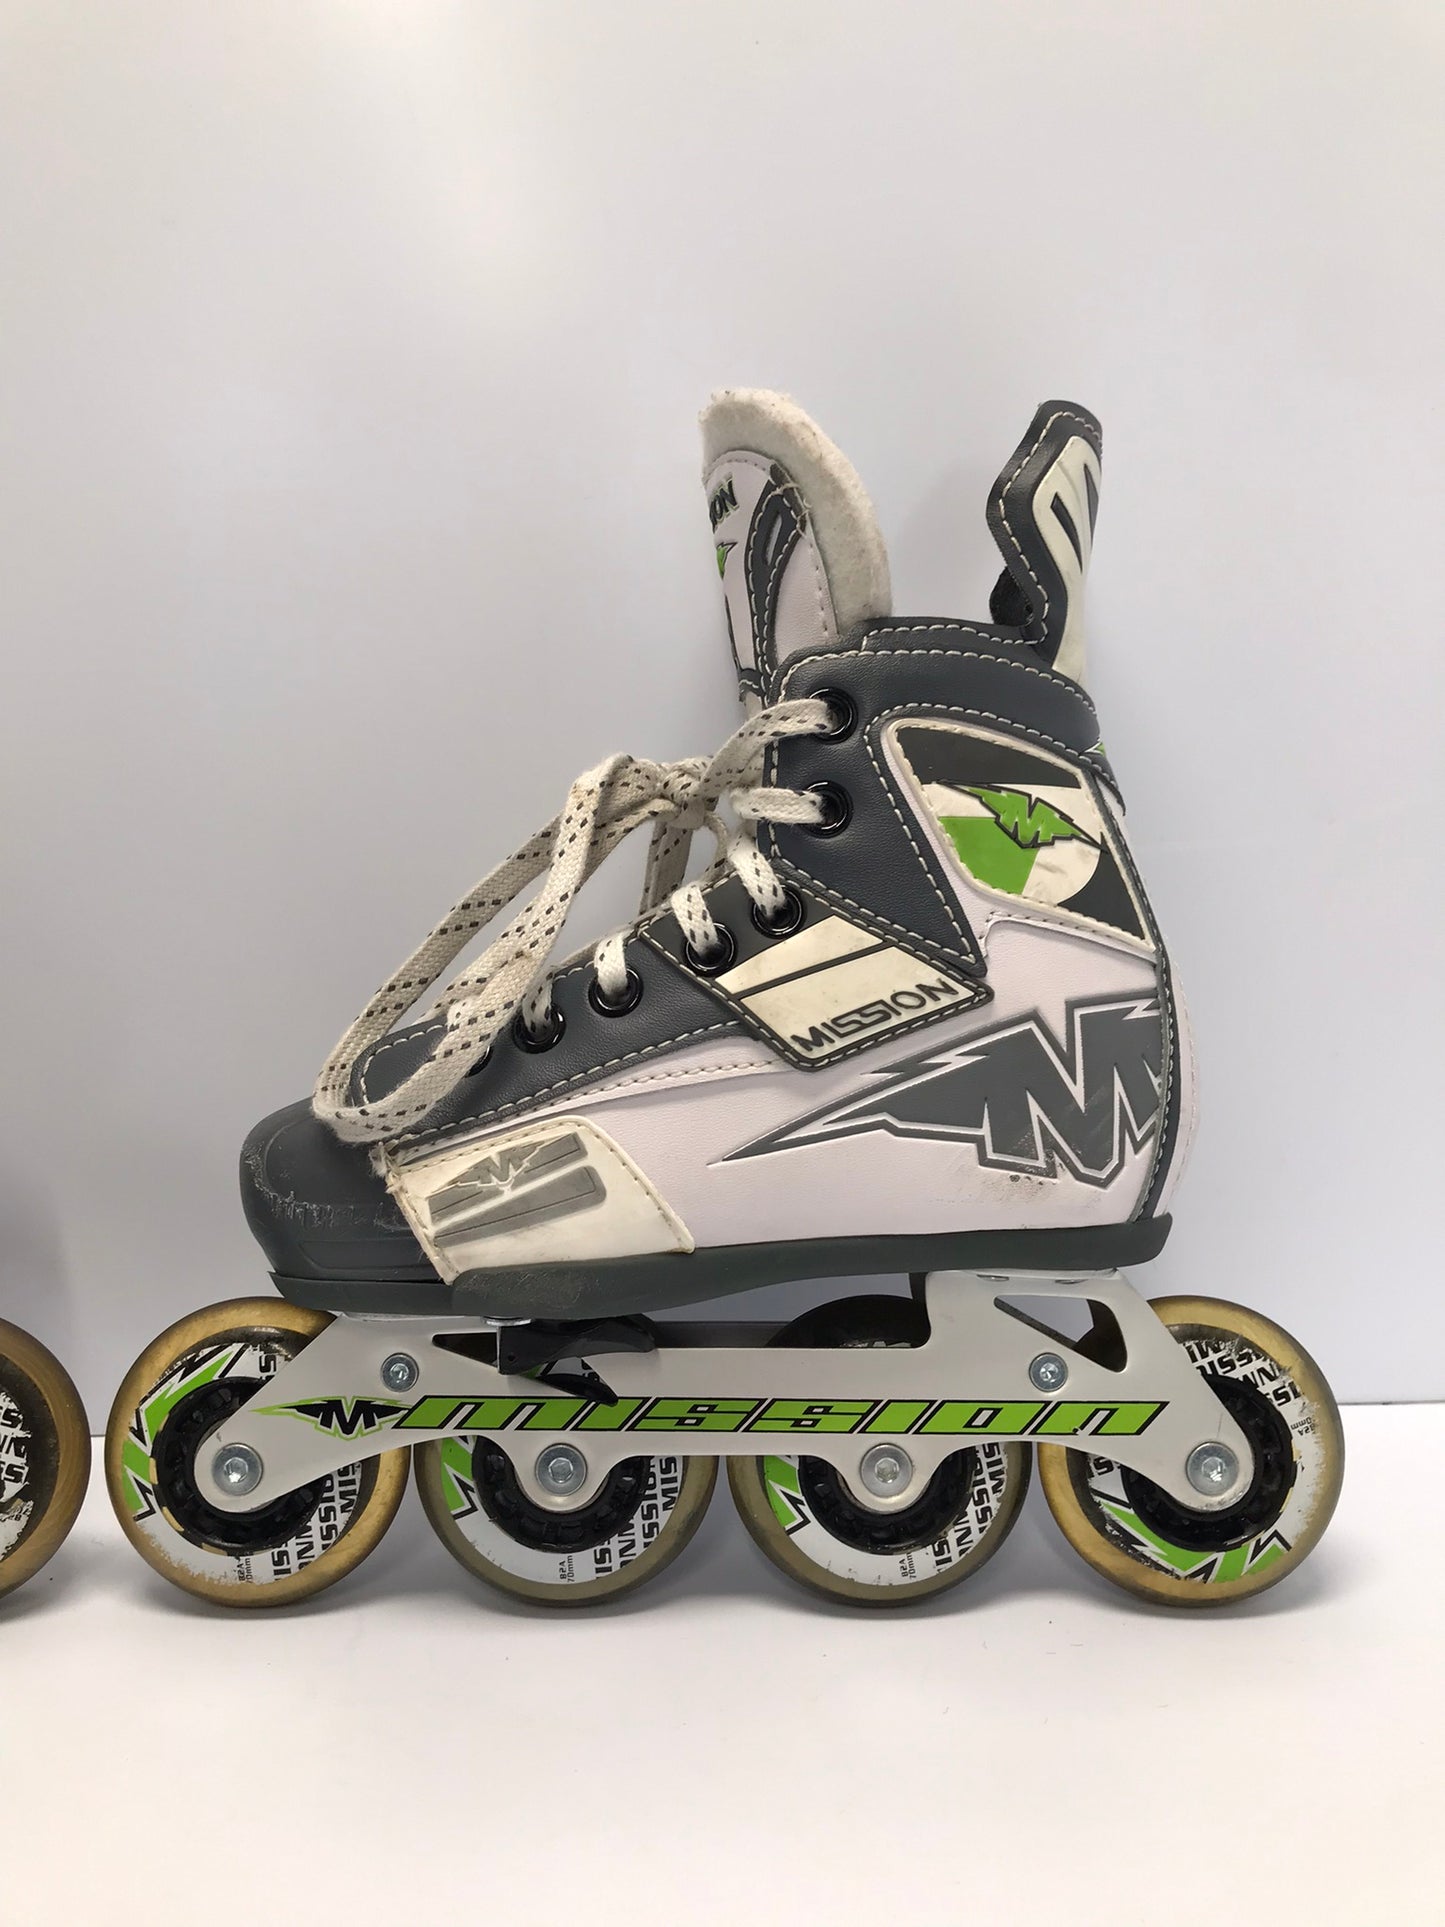 Hockey Roller Hockey Skates Child Size 10-13 Shoe Size Adjustable Mission Grey White Lime Rubber Wheels Excellent